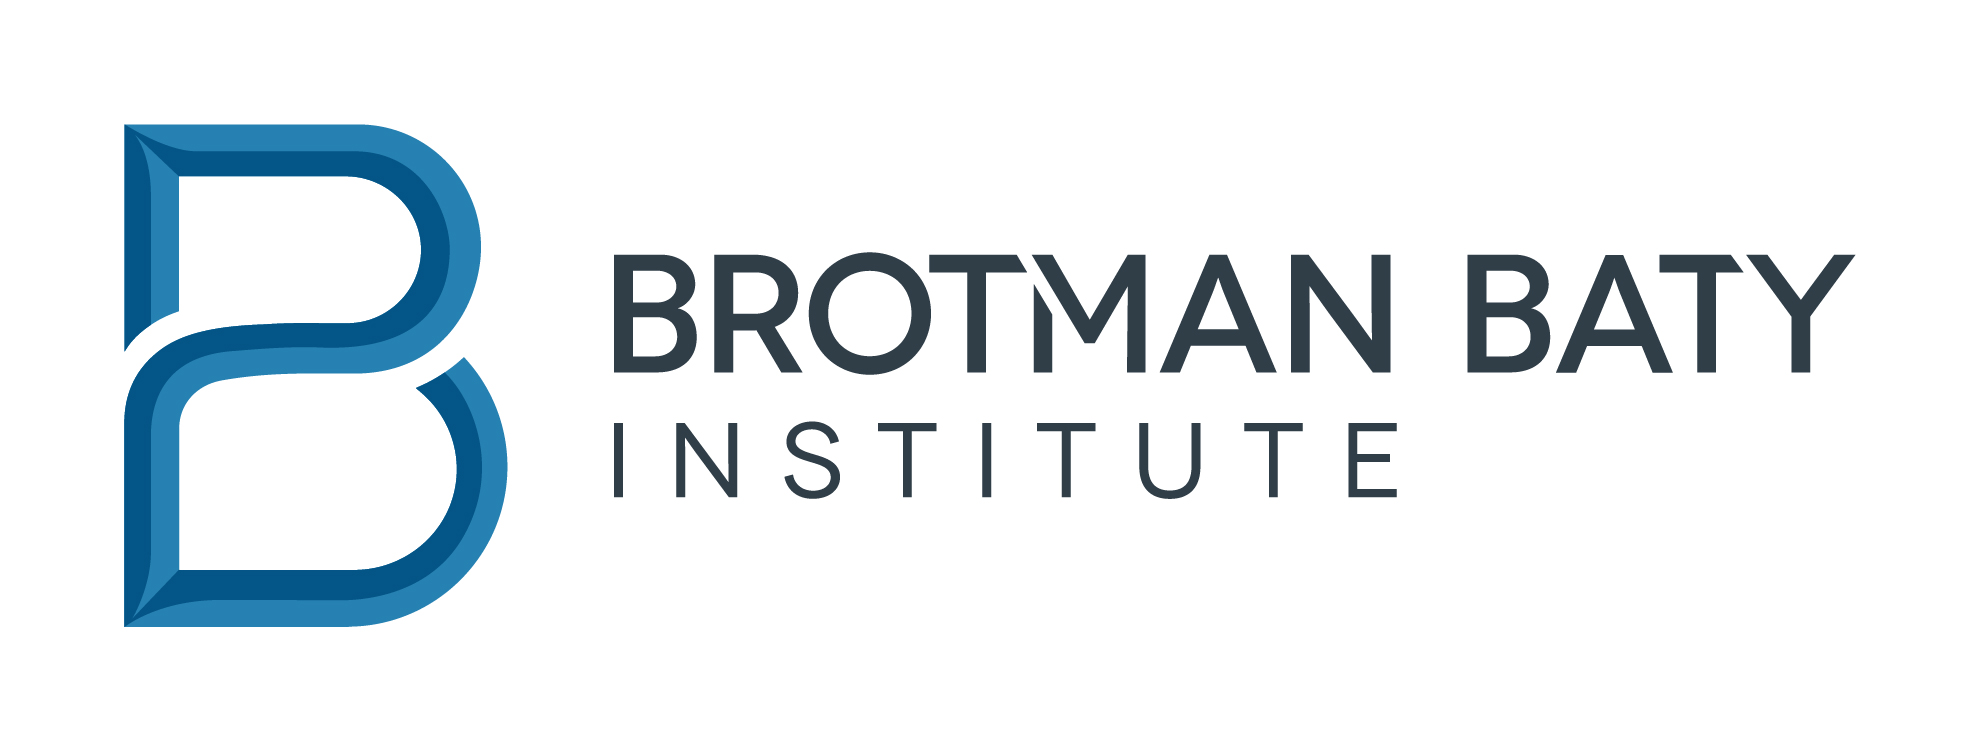 Brotman Baty Institute logo